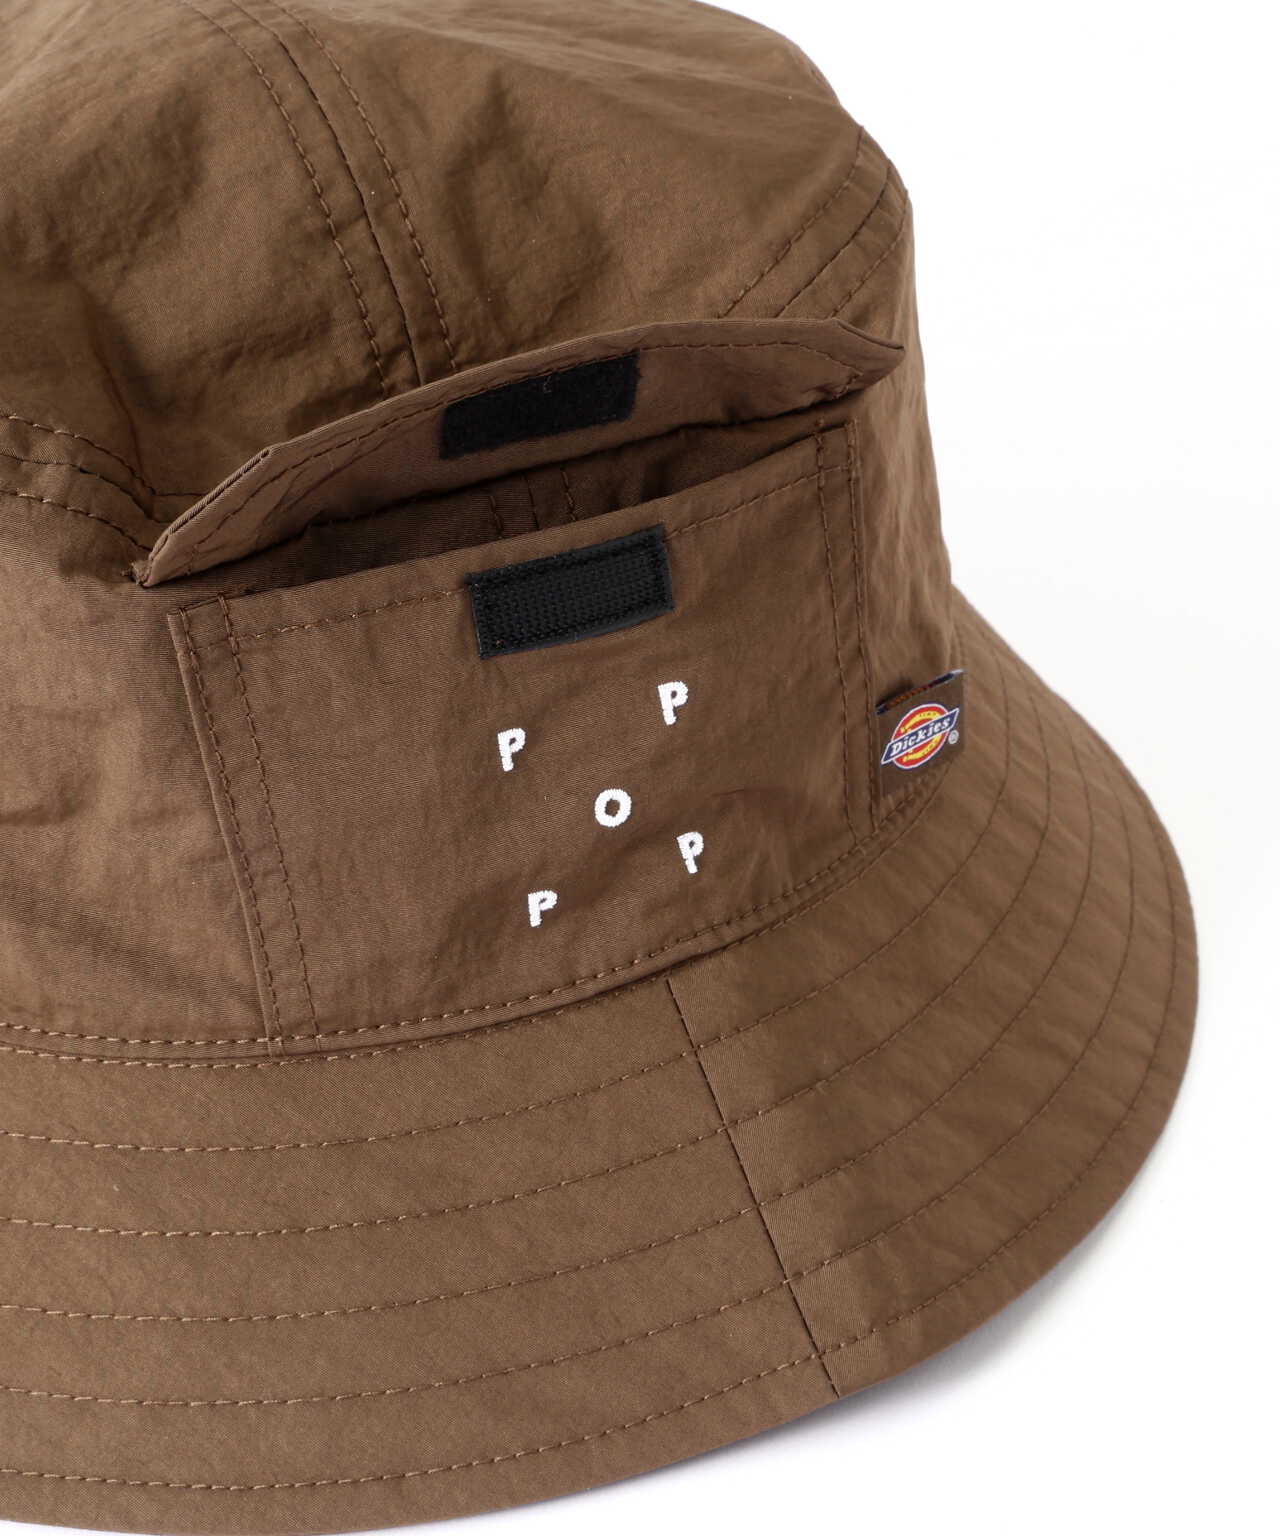 POP TRADING COMPANY/ポップトレーディングカンパニー/Pop x Dickies Bucket Hat